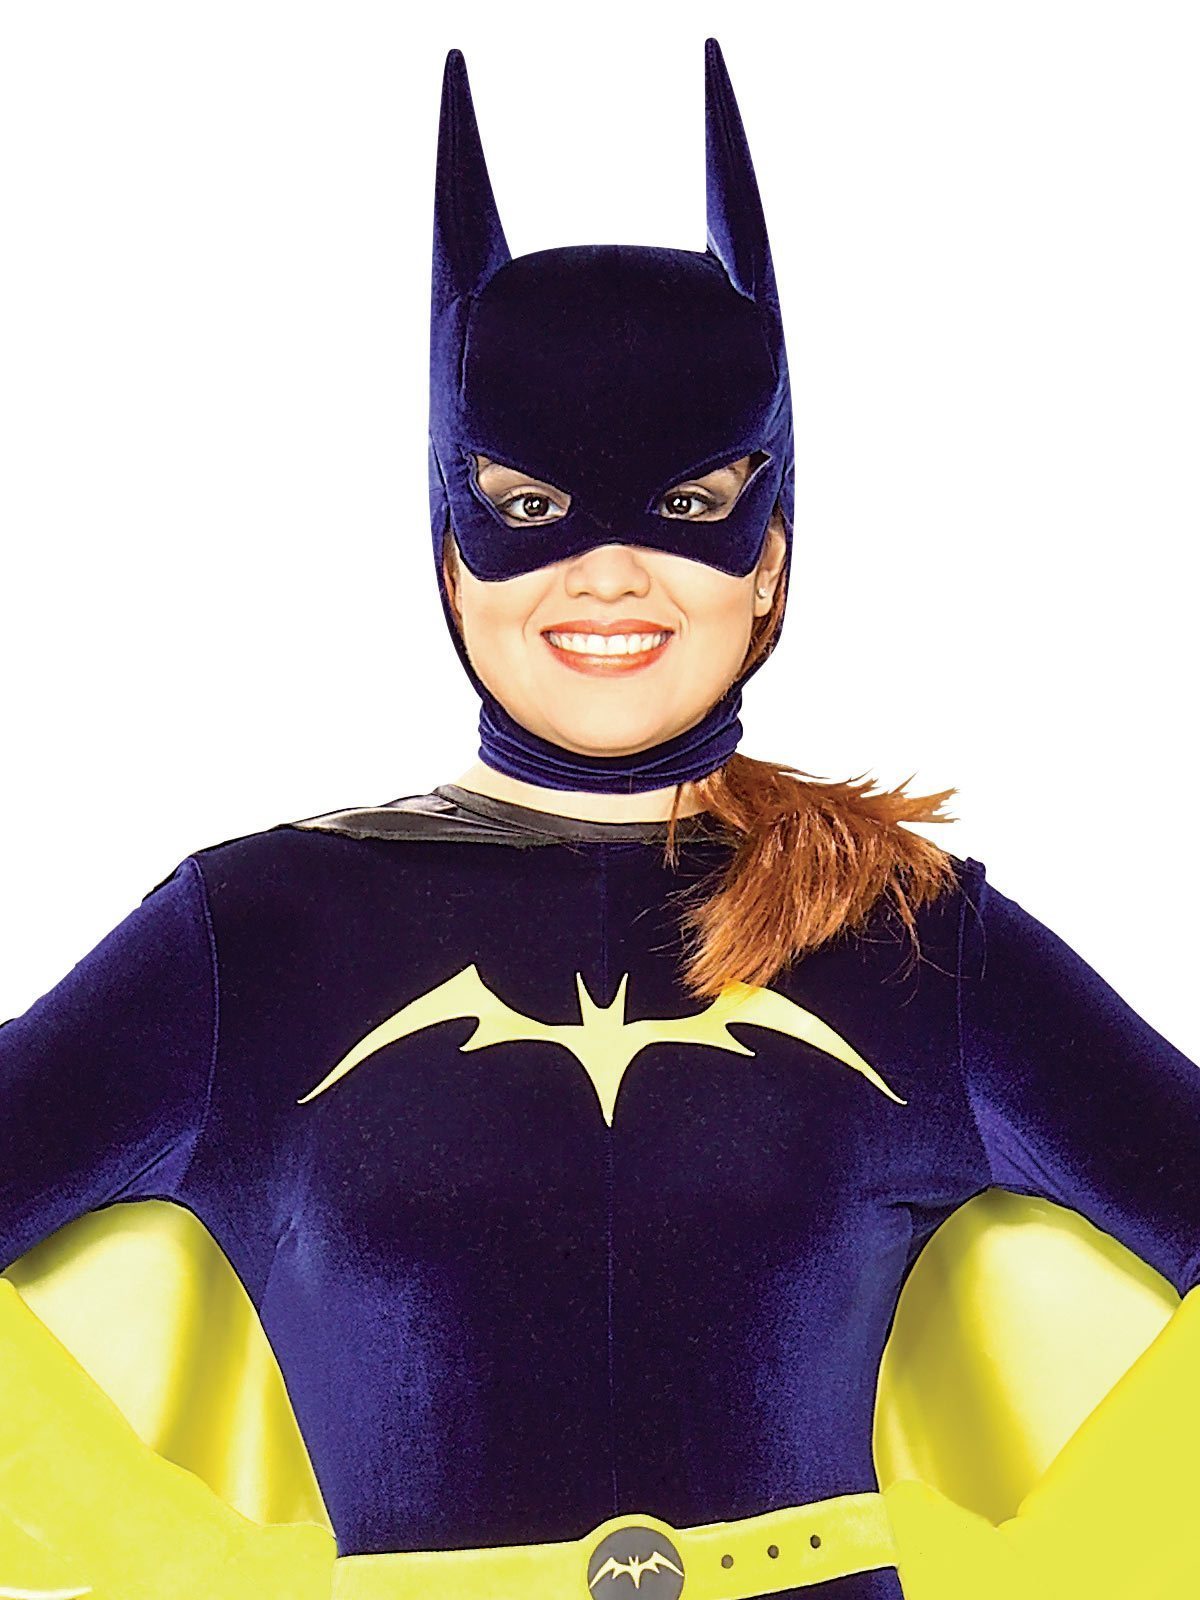 Batgirl Deluxe Costume for Adults - DC Comics